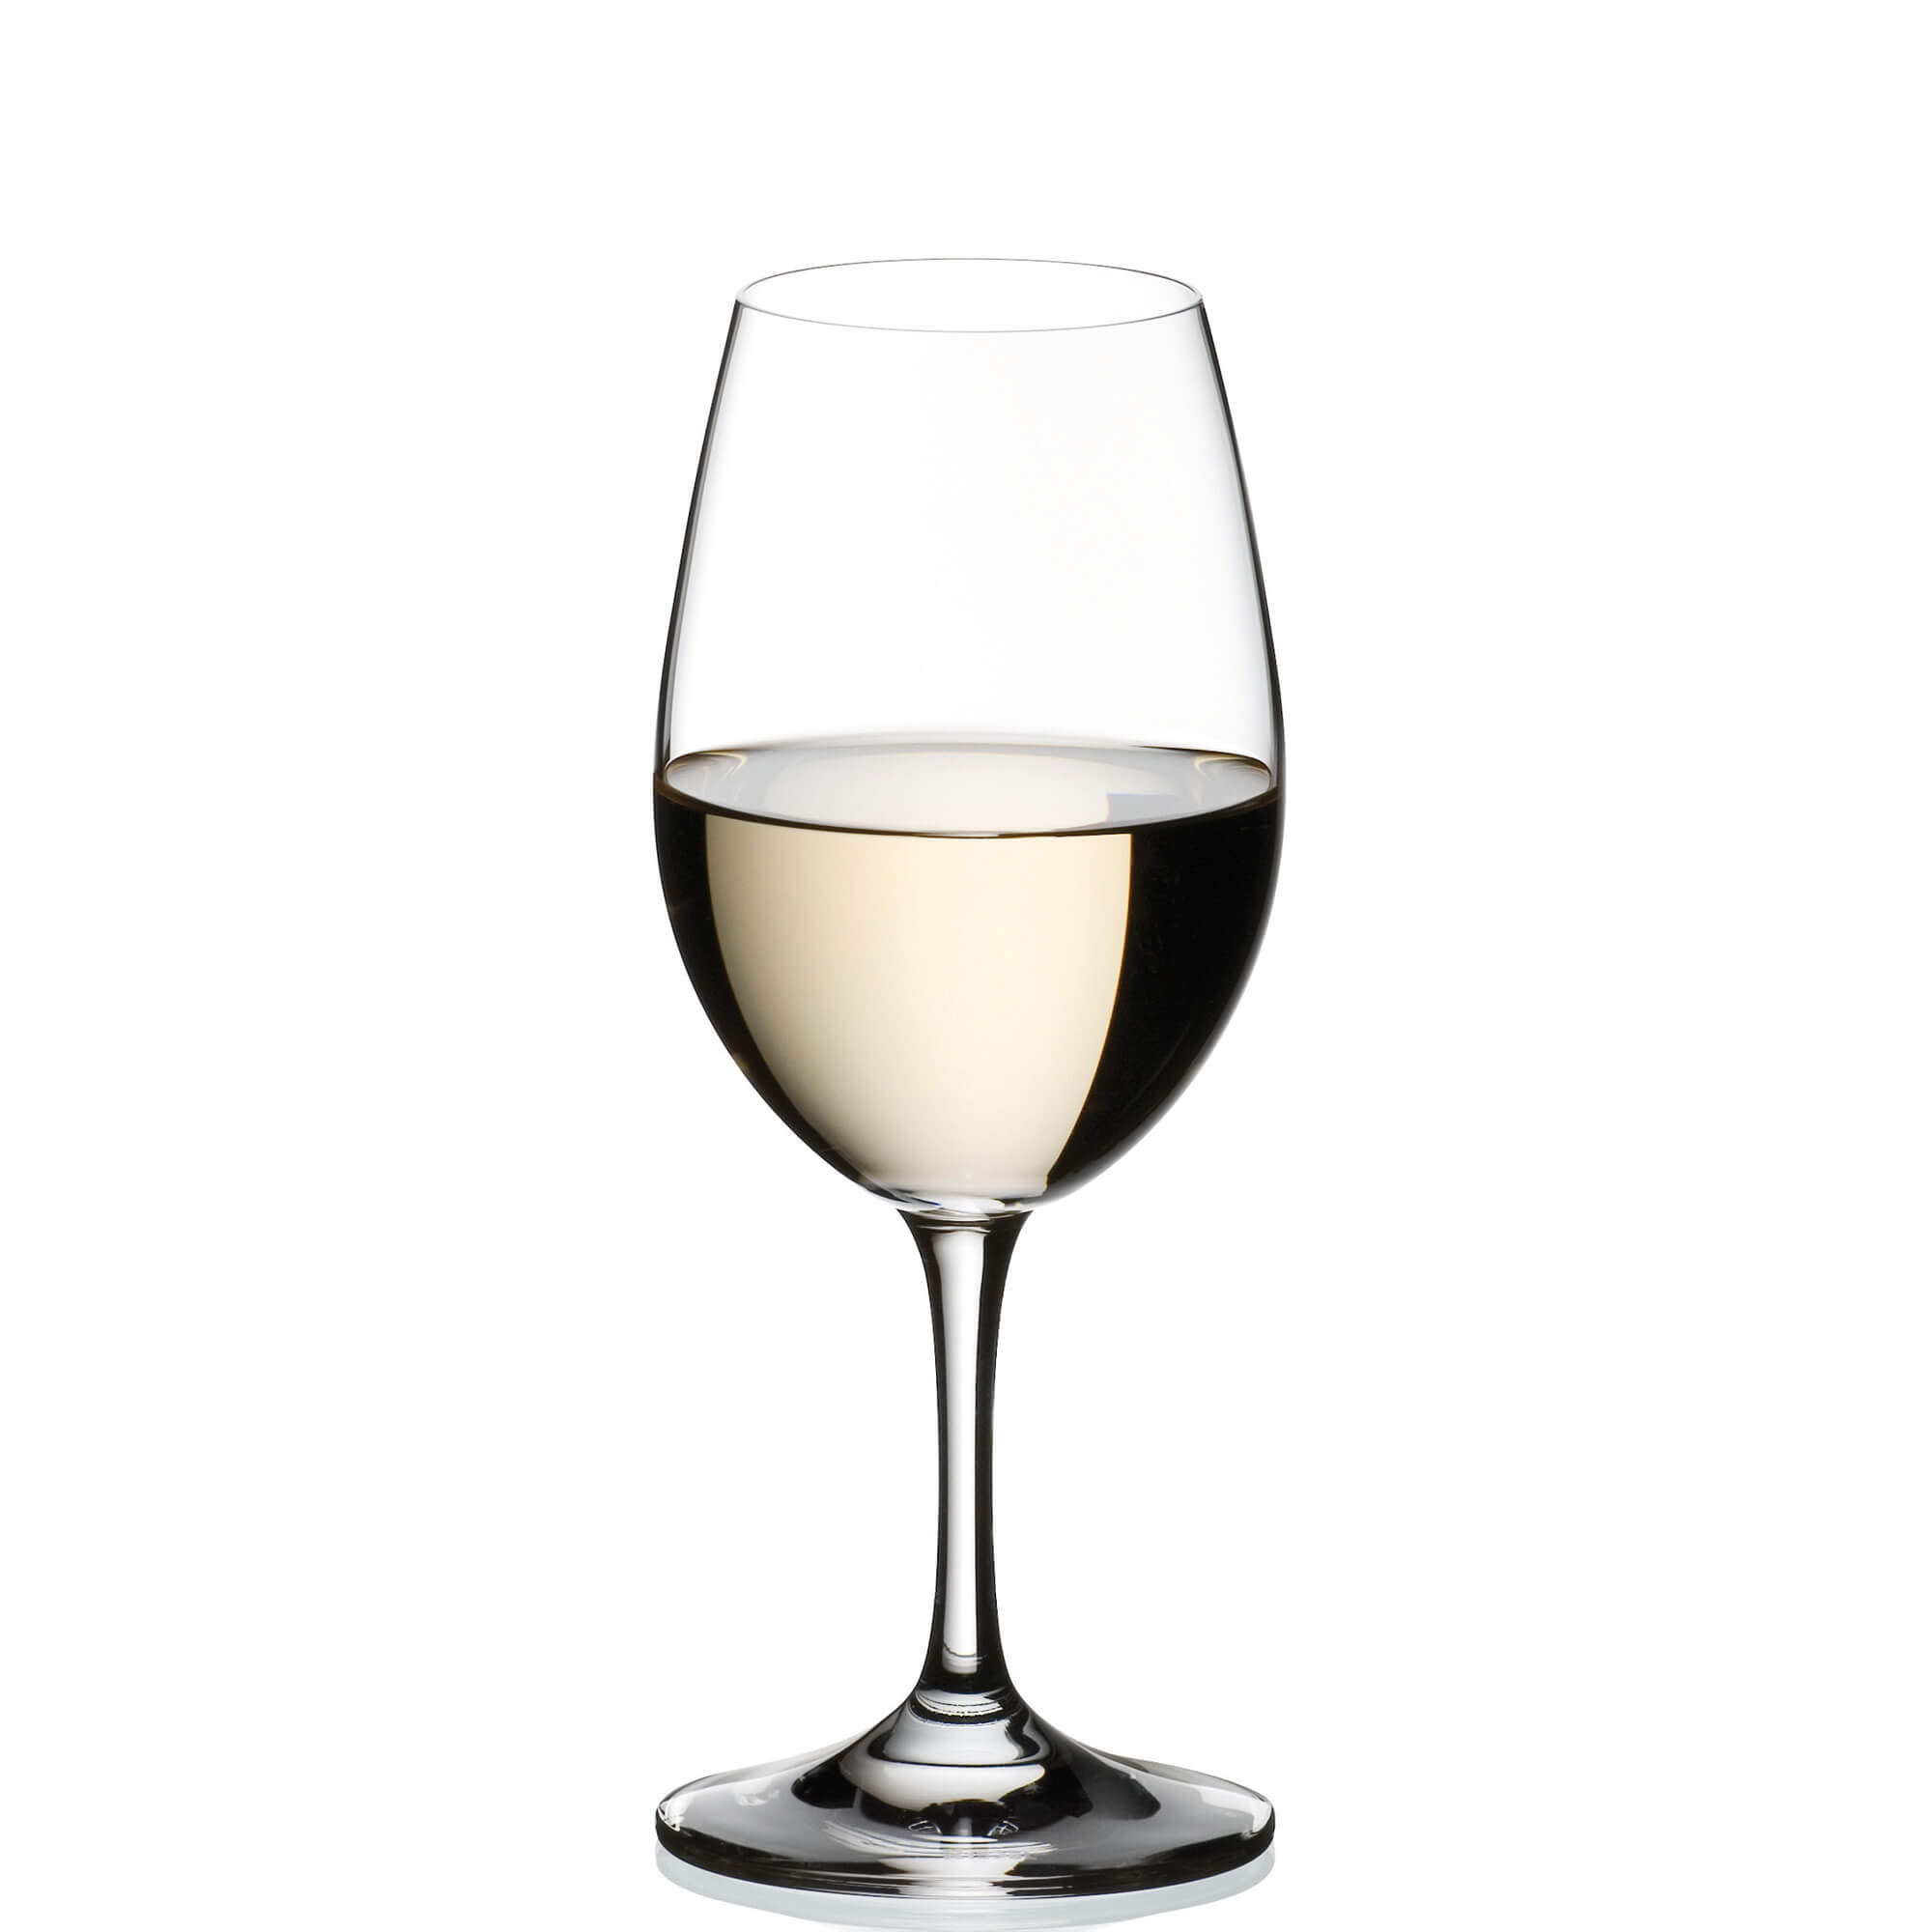 White wine glass Ouverture, Riedel - 280ml (2 pcs.)